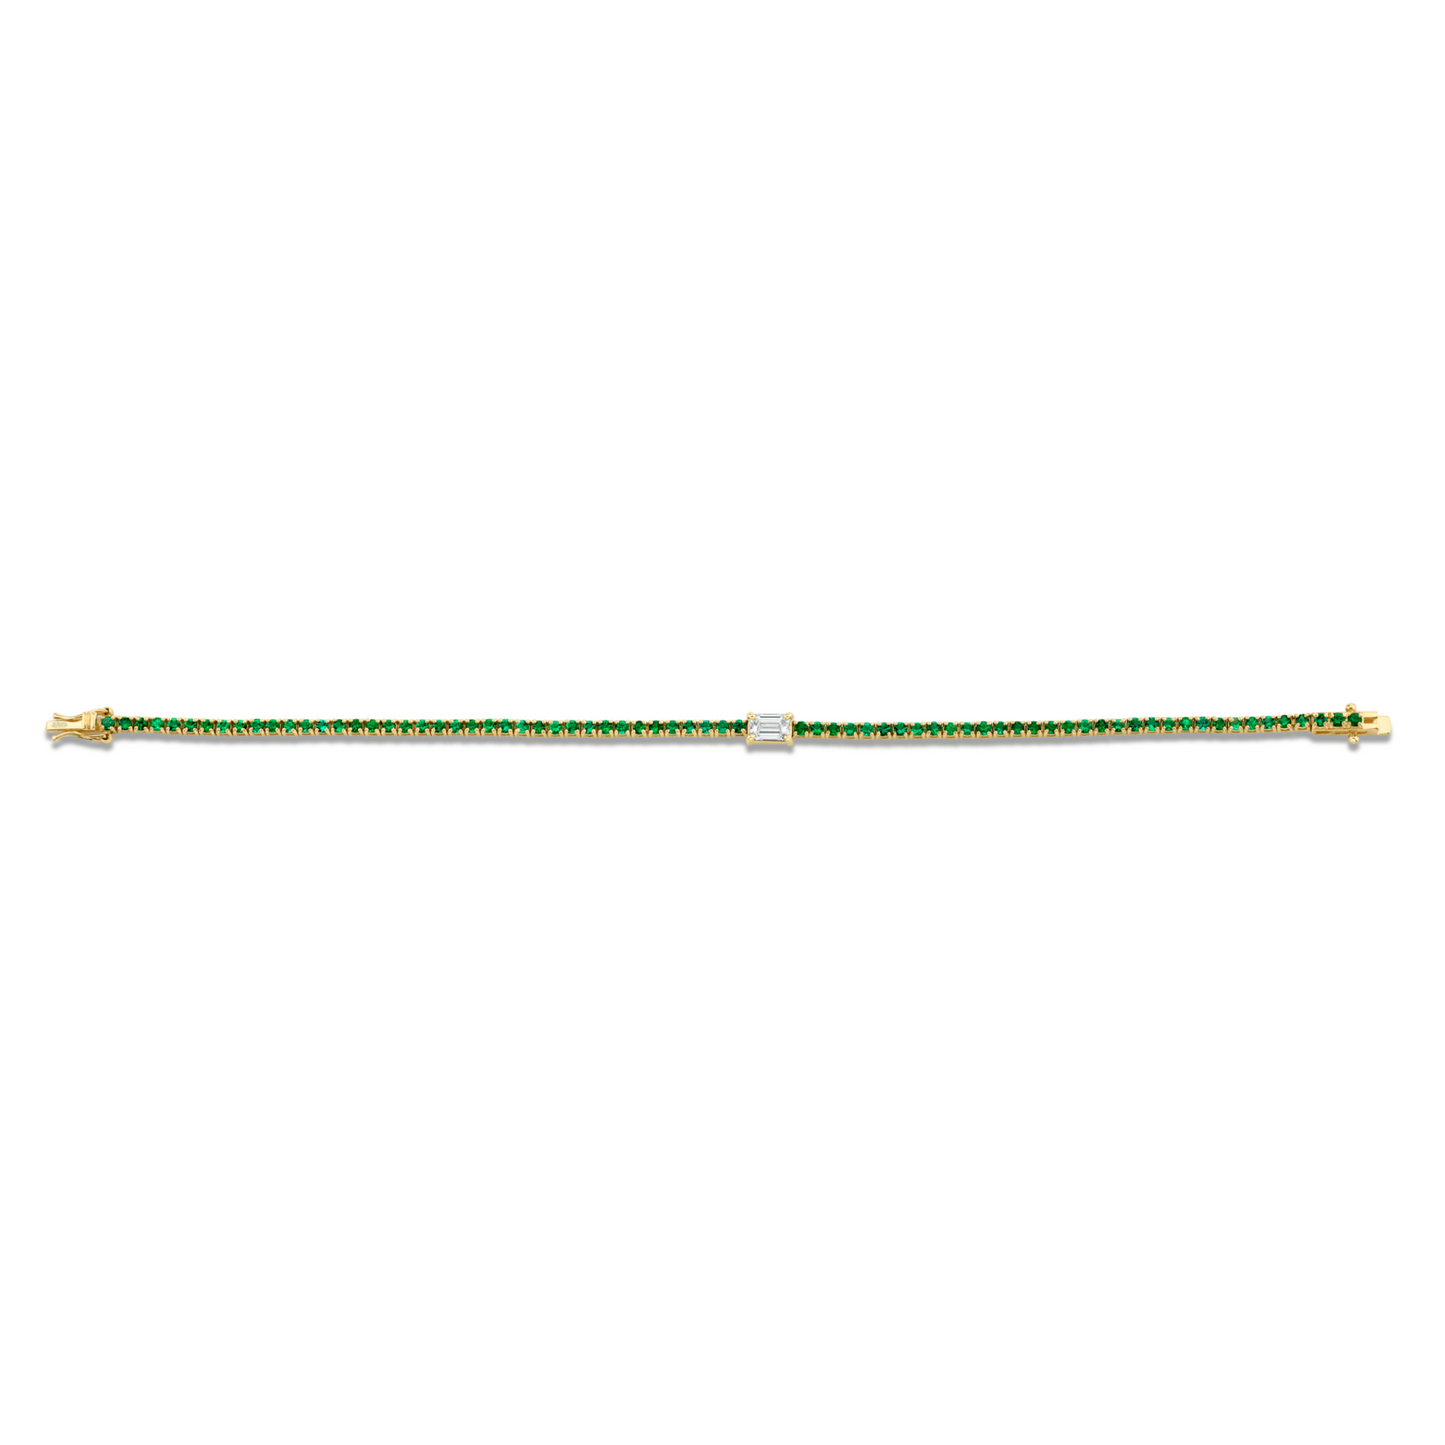 2.57 Carat 18k Yellow Gold Straight Line Bracelet